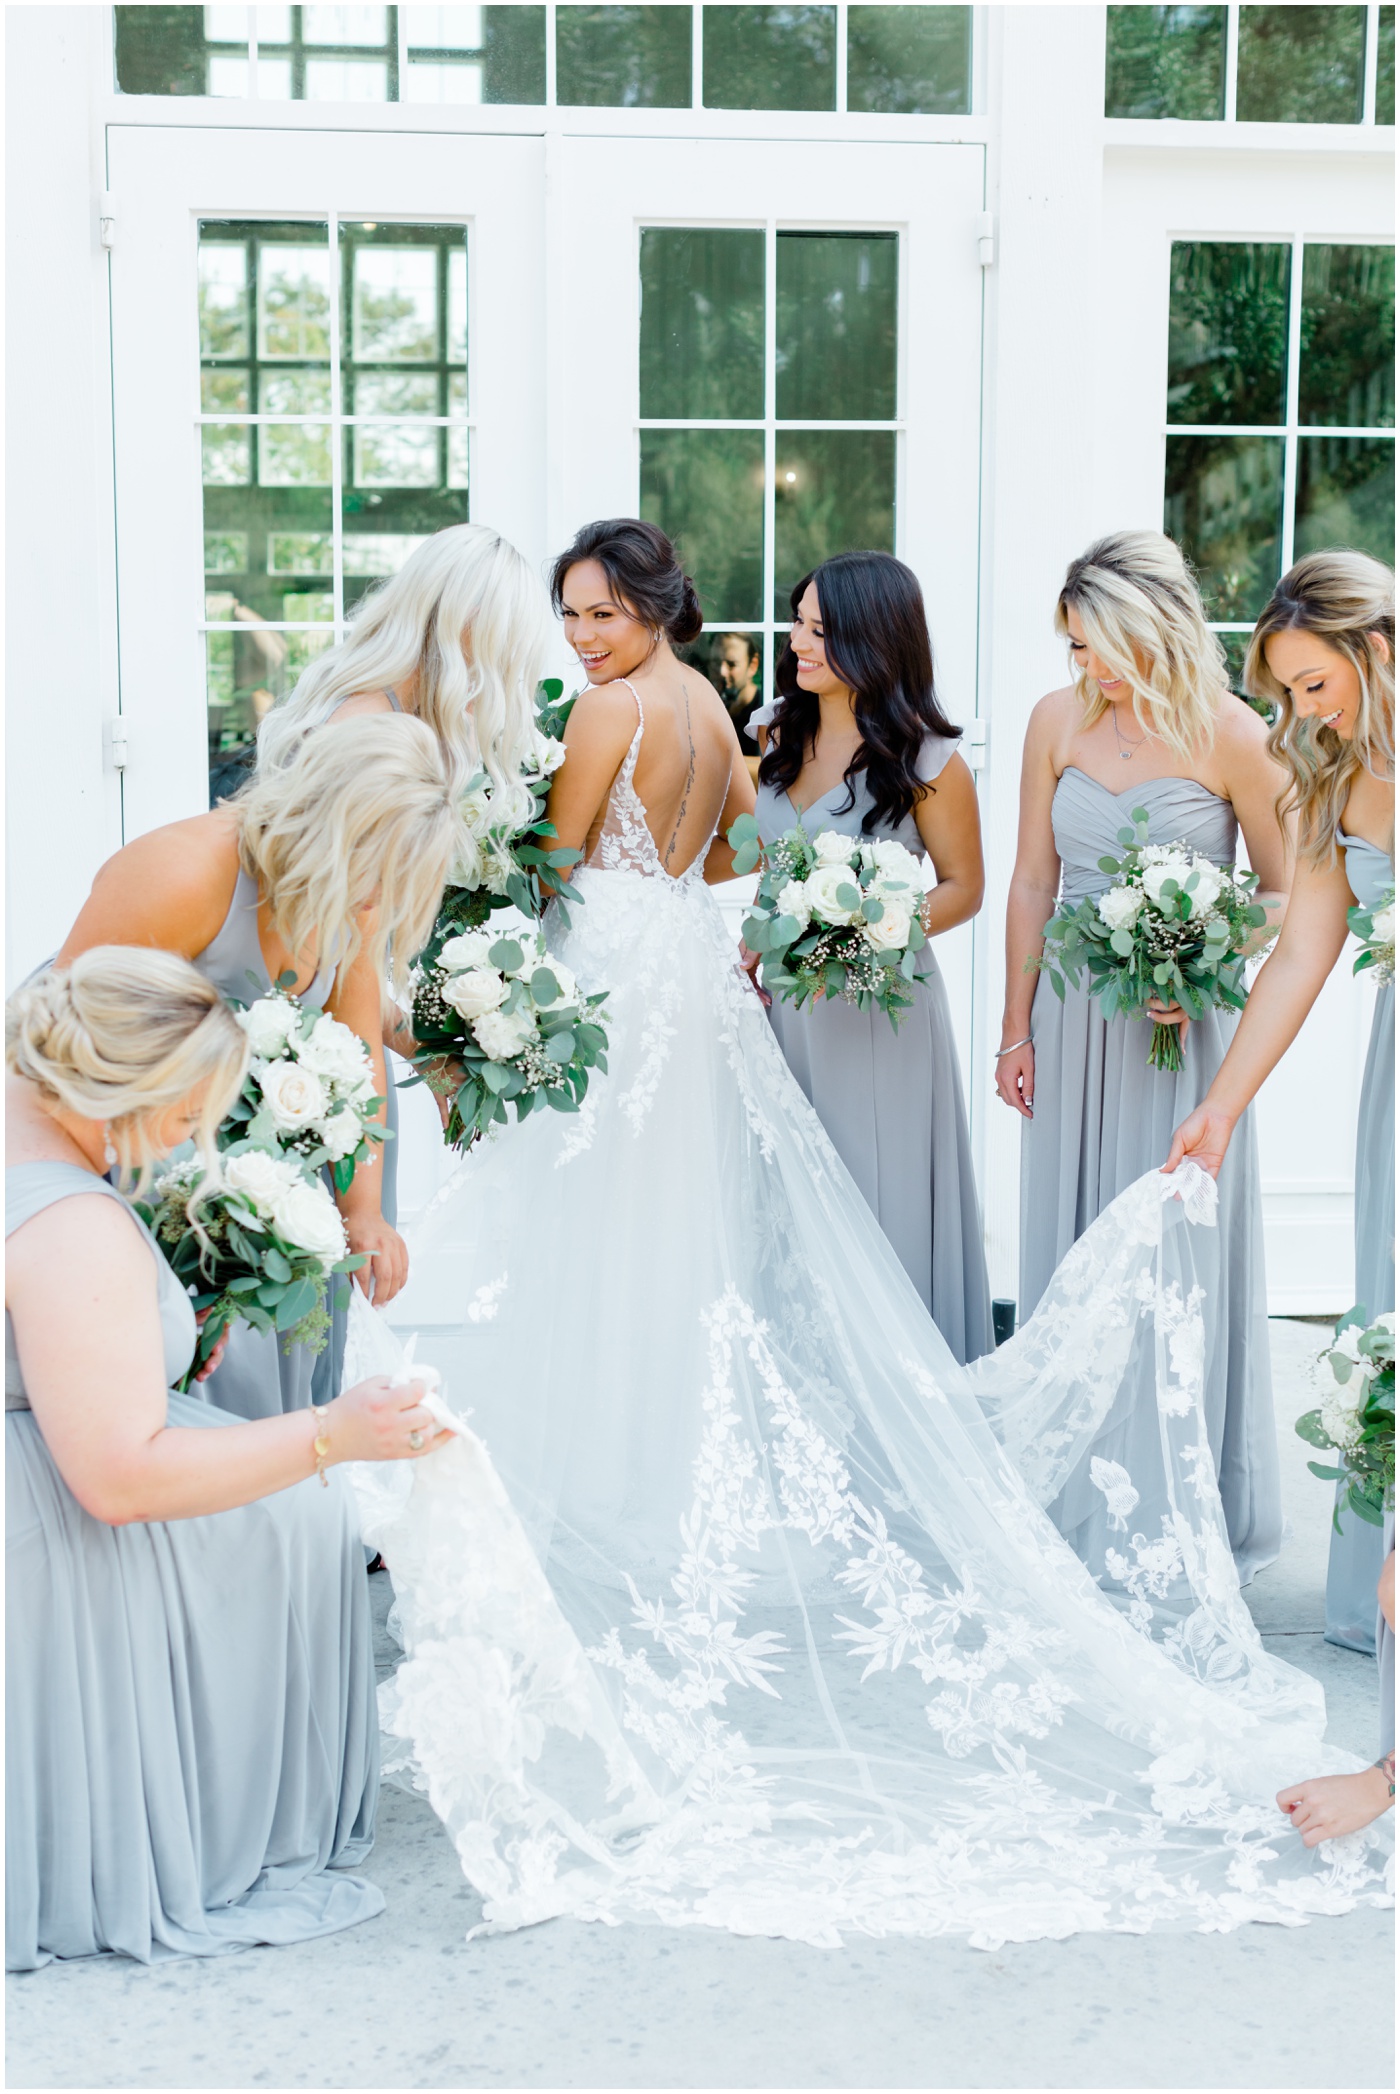 bridesmaids admiring the bride in her wedding dress